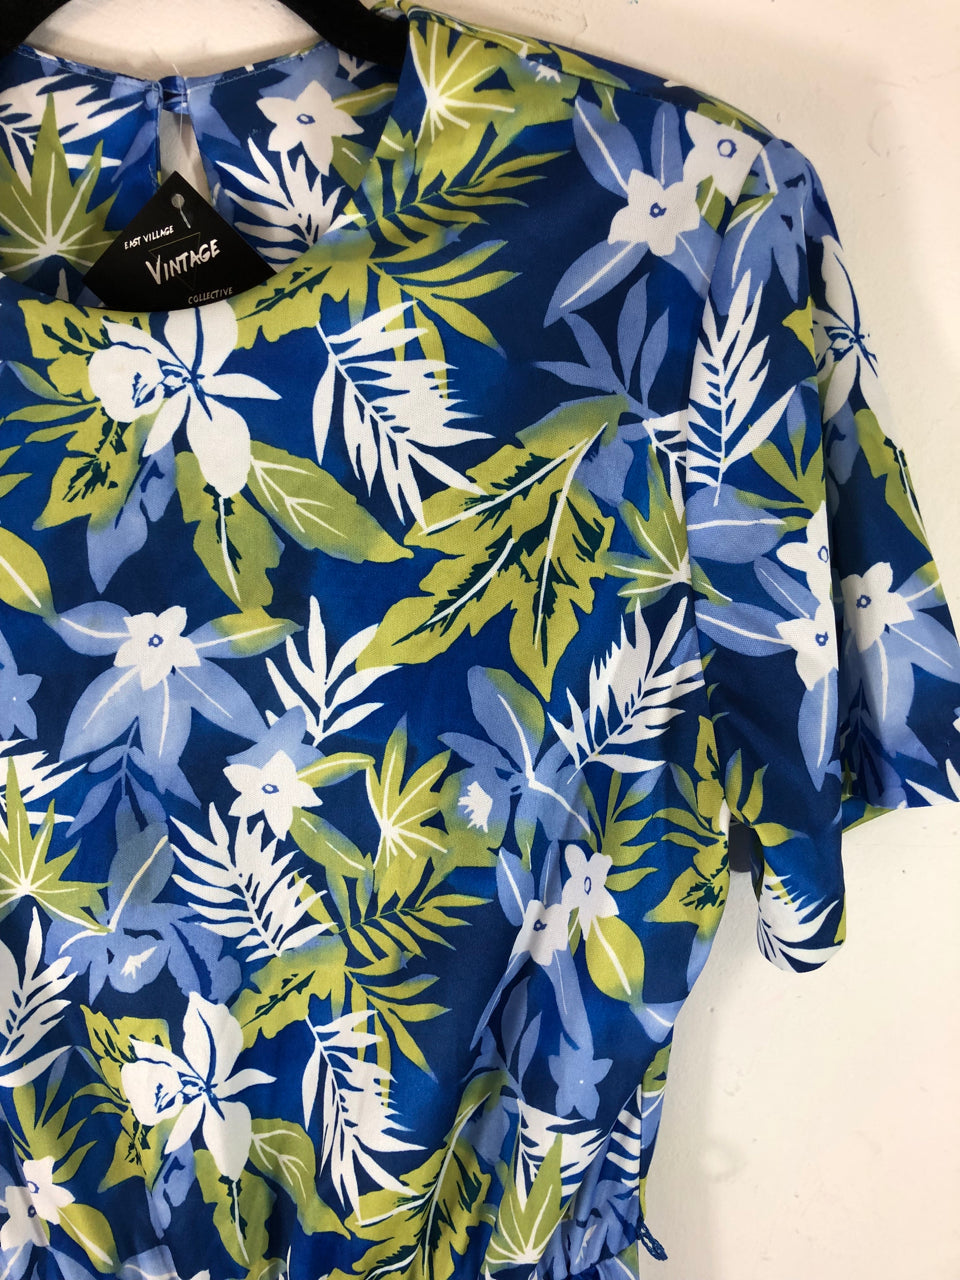 80s Tropical Printed Dress